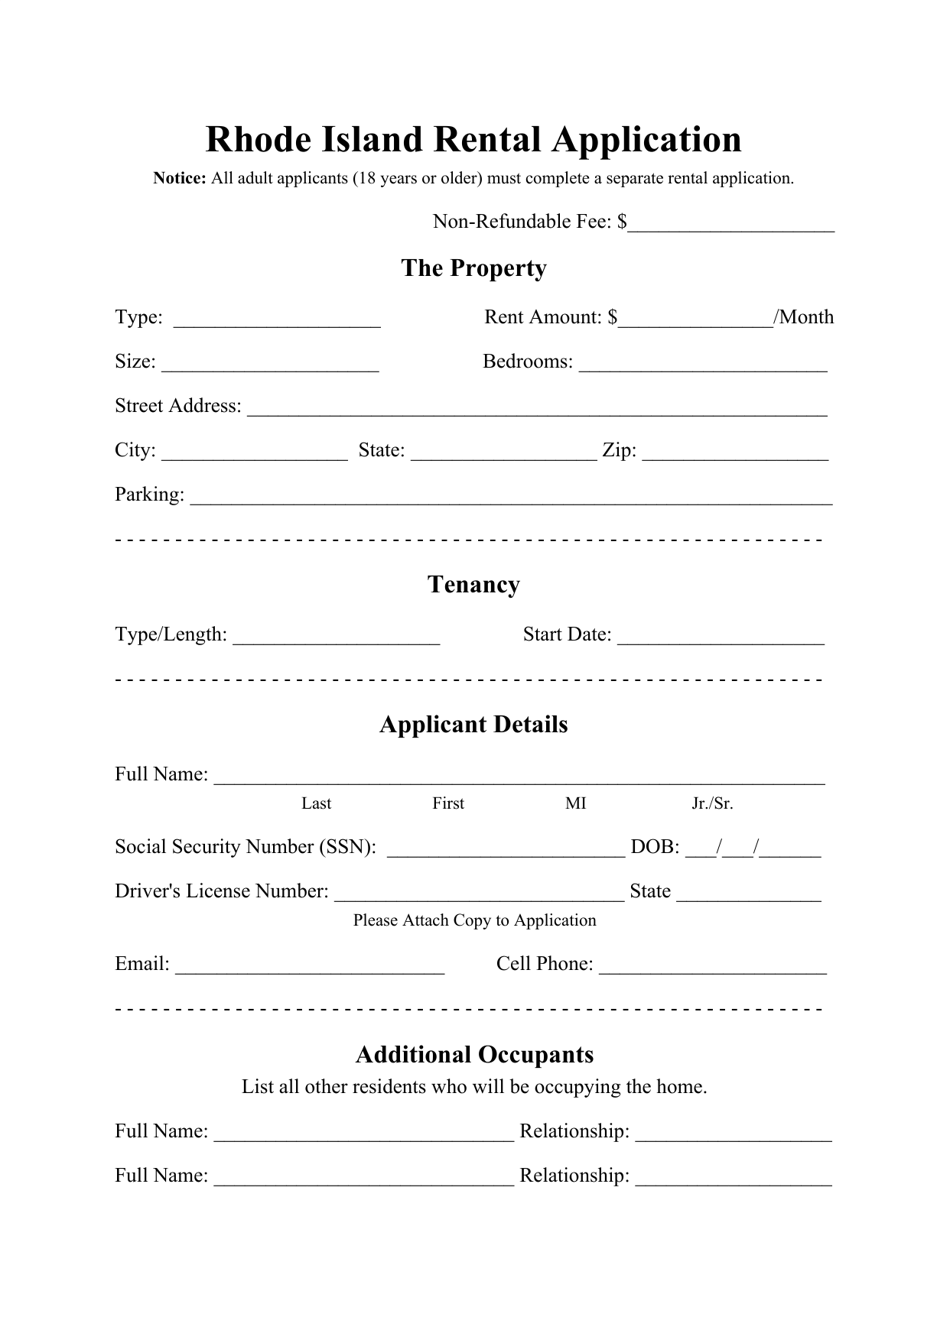 Rental Application Form - Rhode Island, Page 1